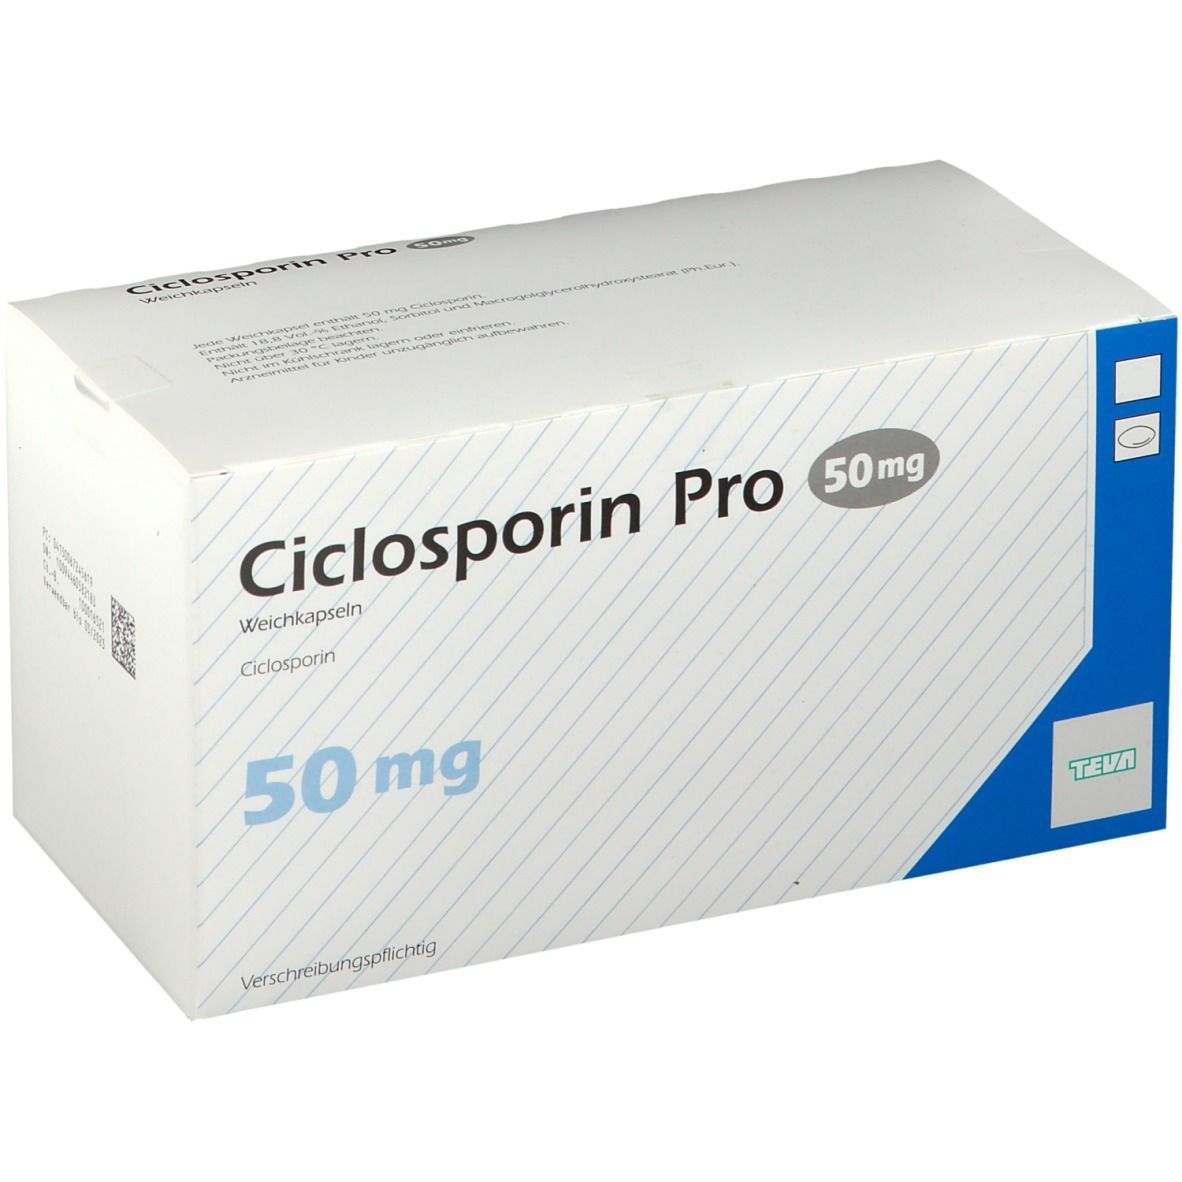 Ciclosporin Pro 50 mg